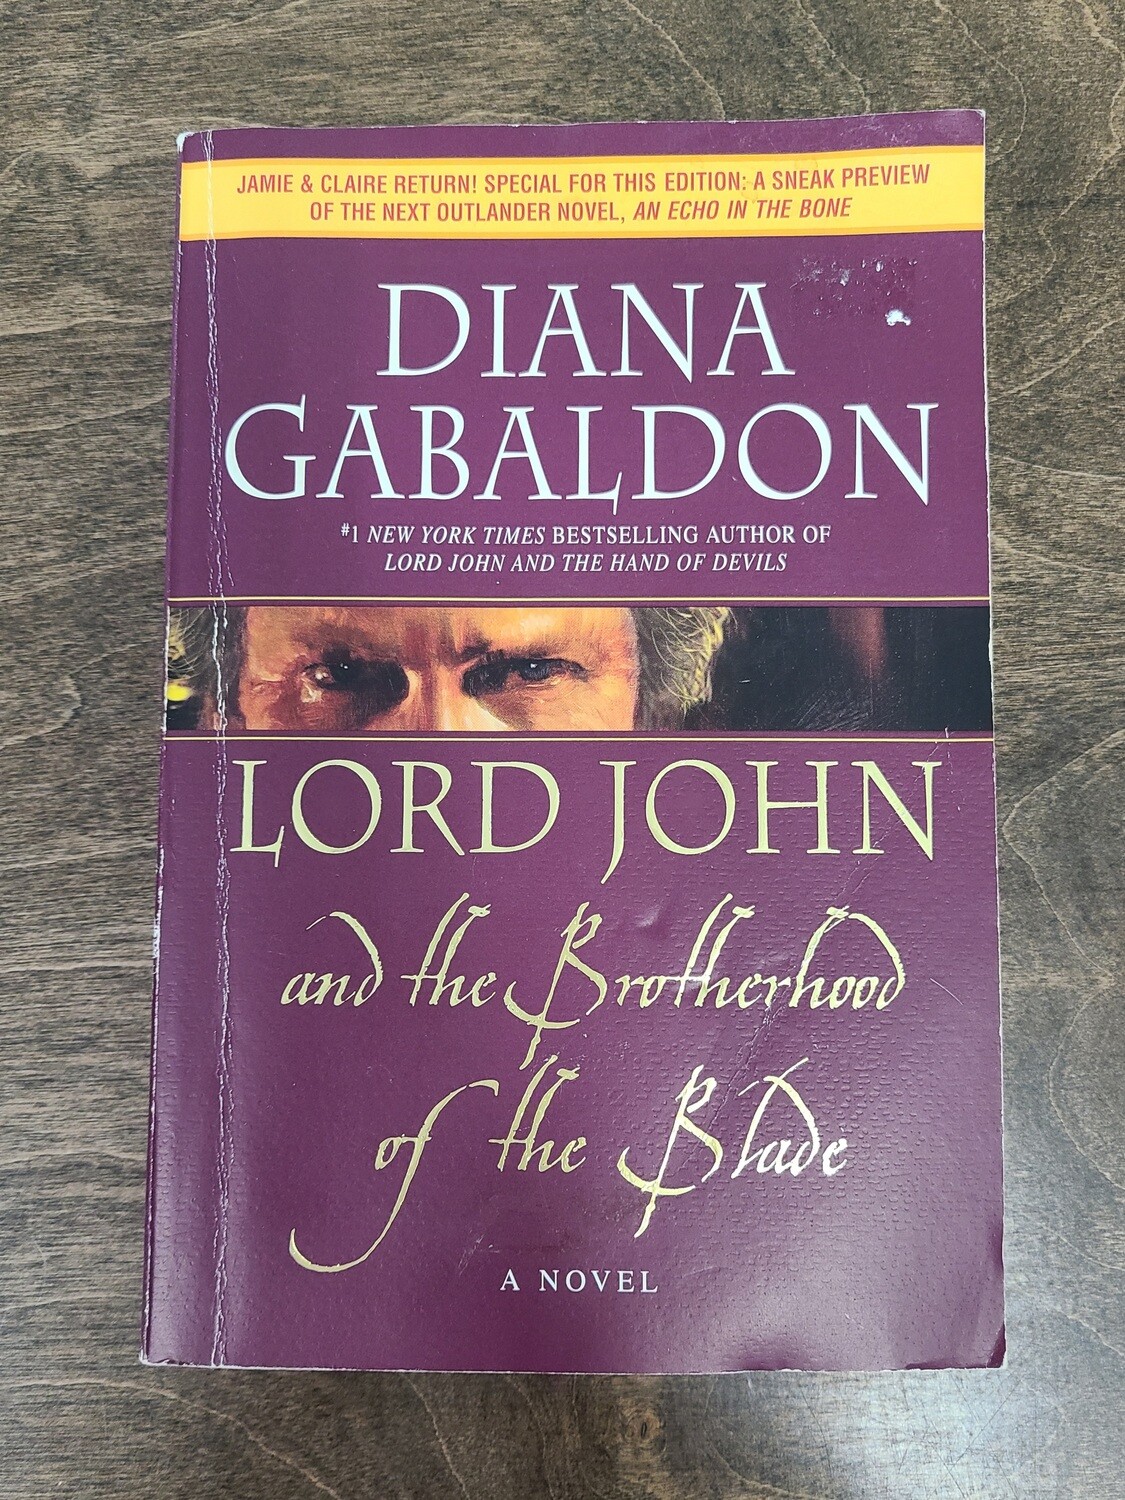 Lord John and the Brotherhood of the Blade by Diana Gabaldon